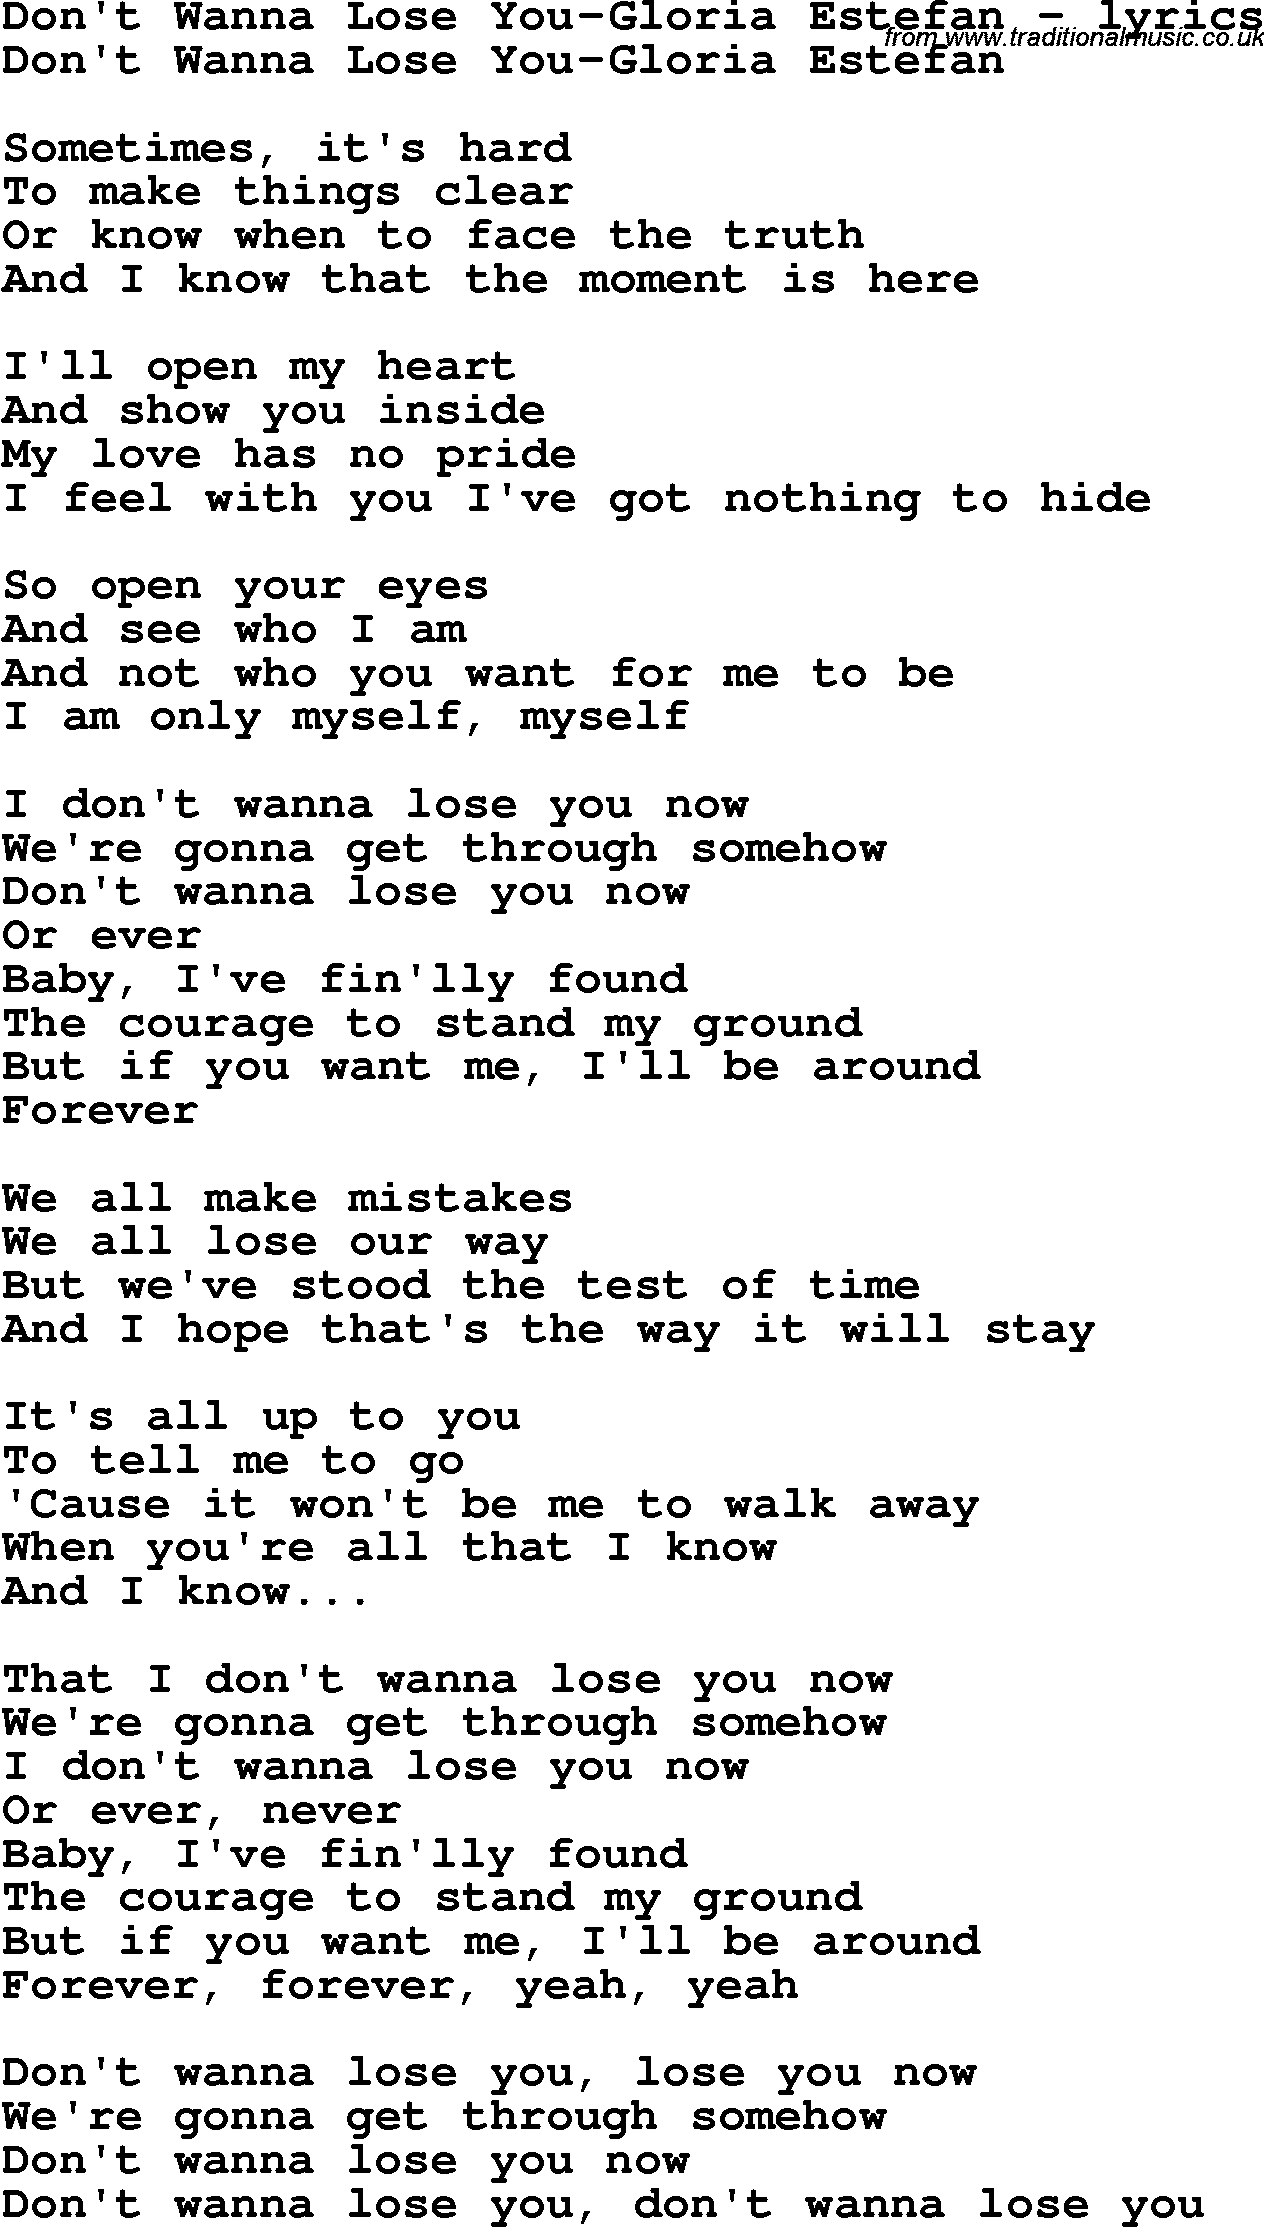 Love Song Lyrics for: Don't Wanna Lose You-Gloria Estefan